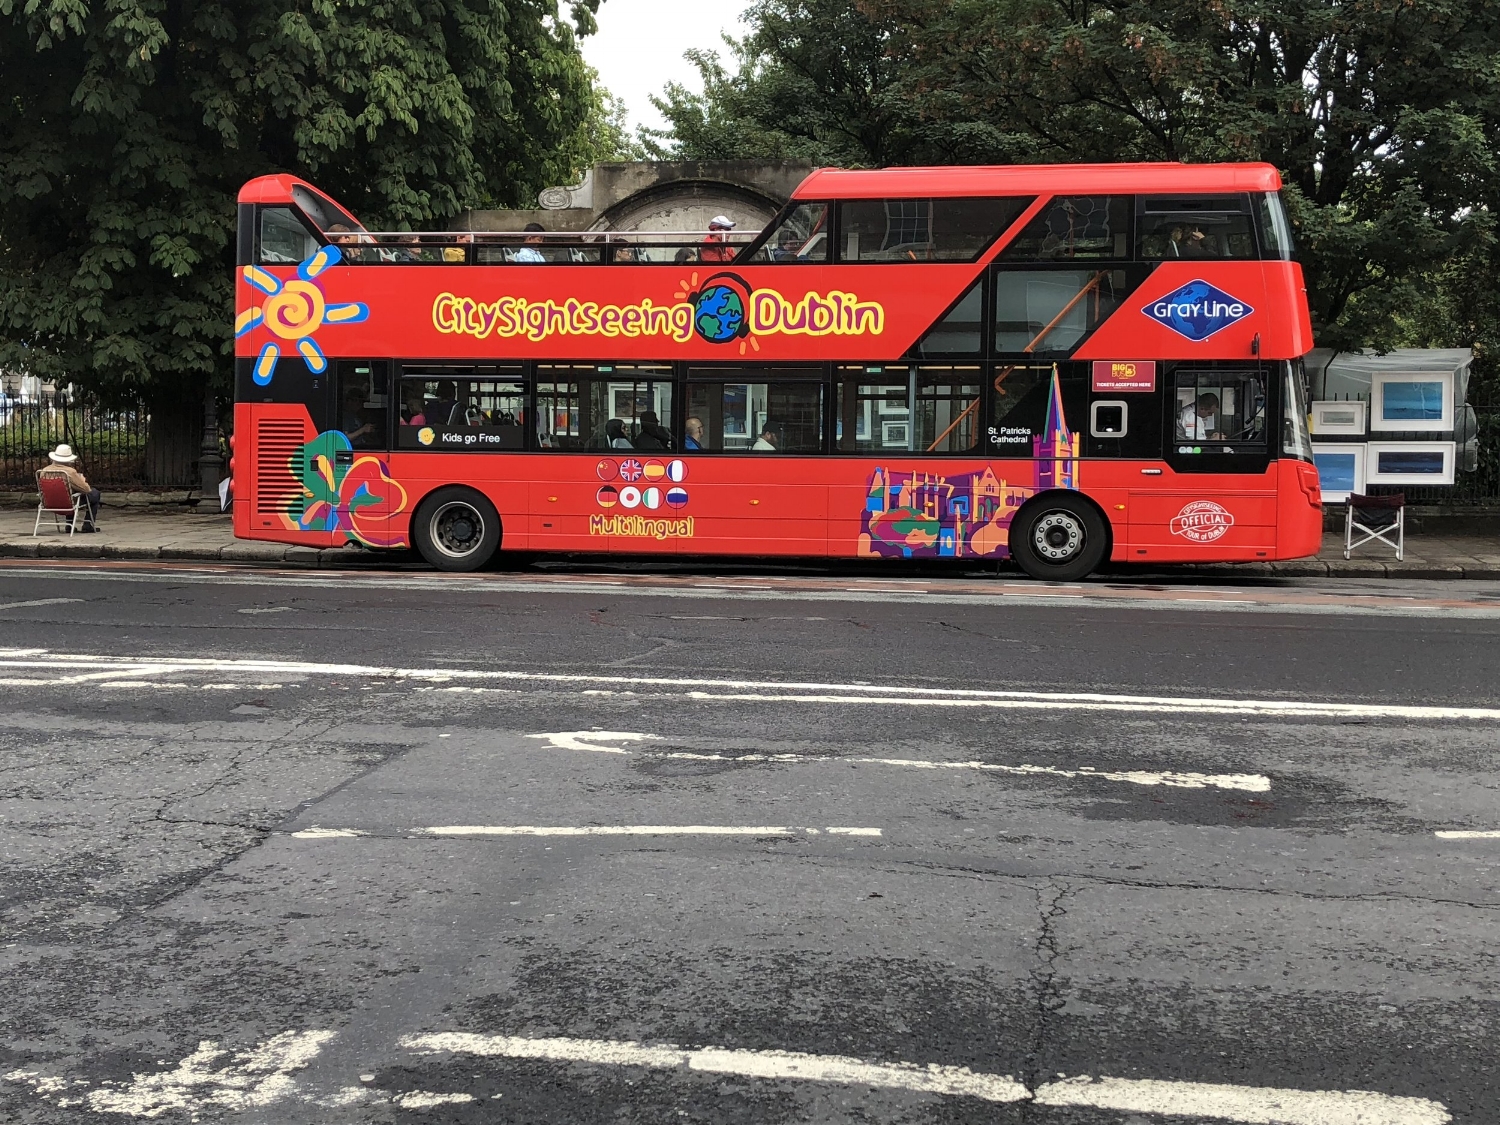 Double-decker bus